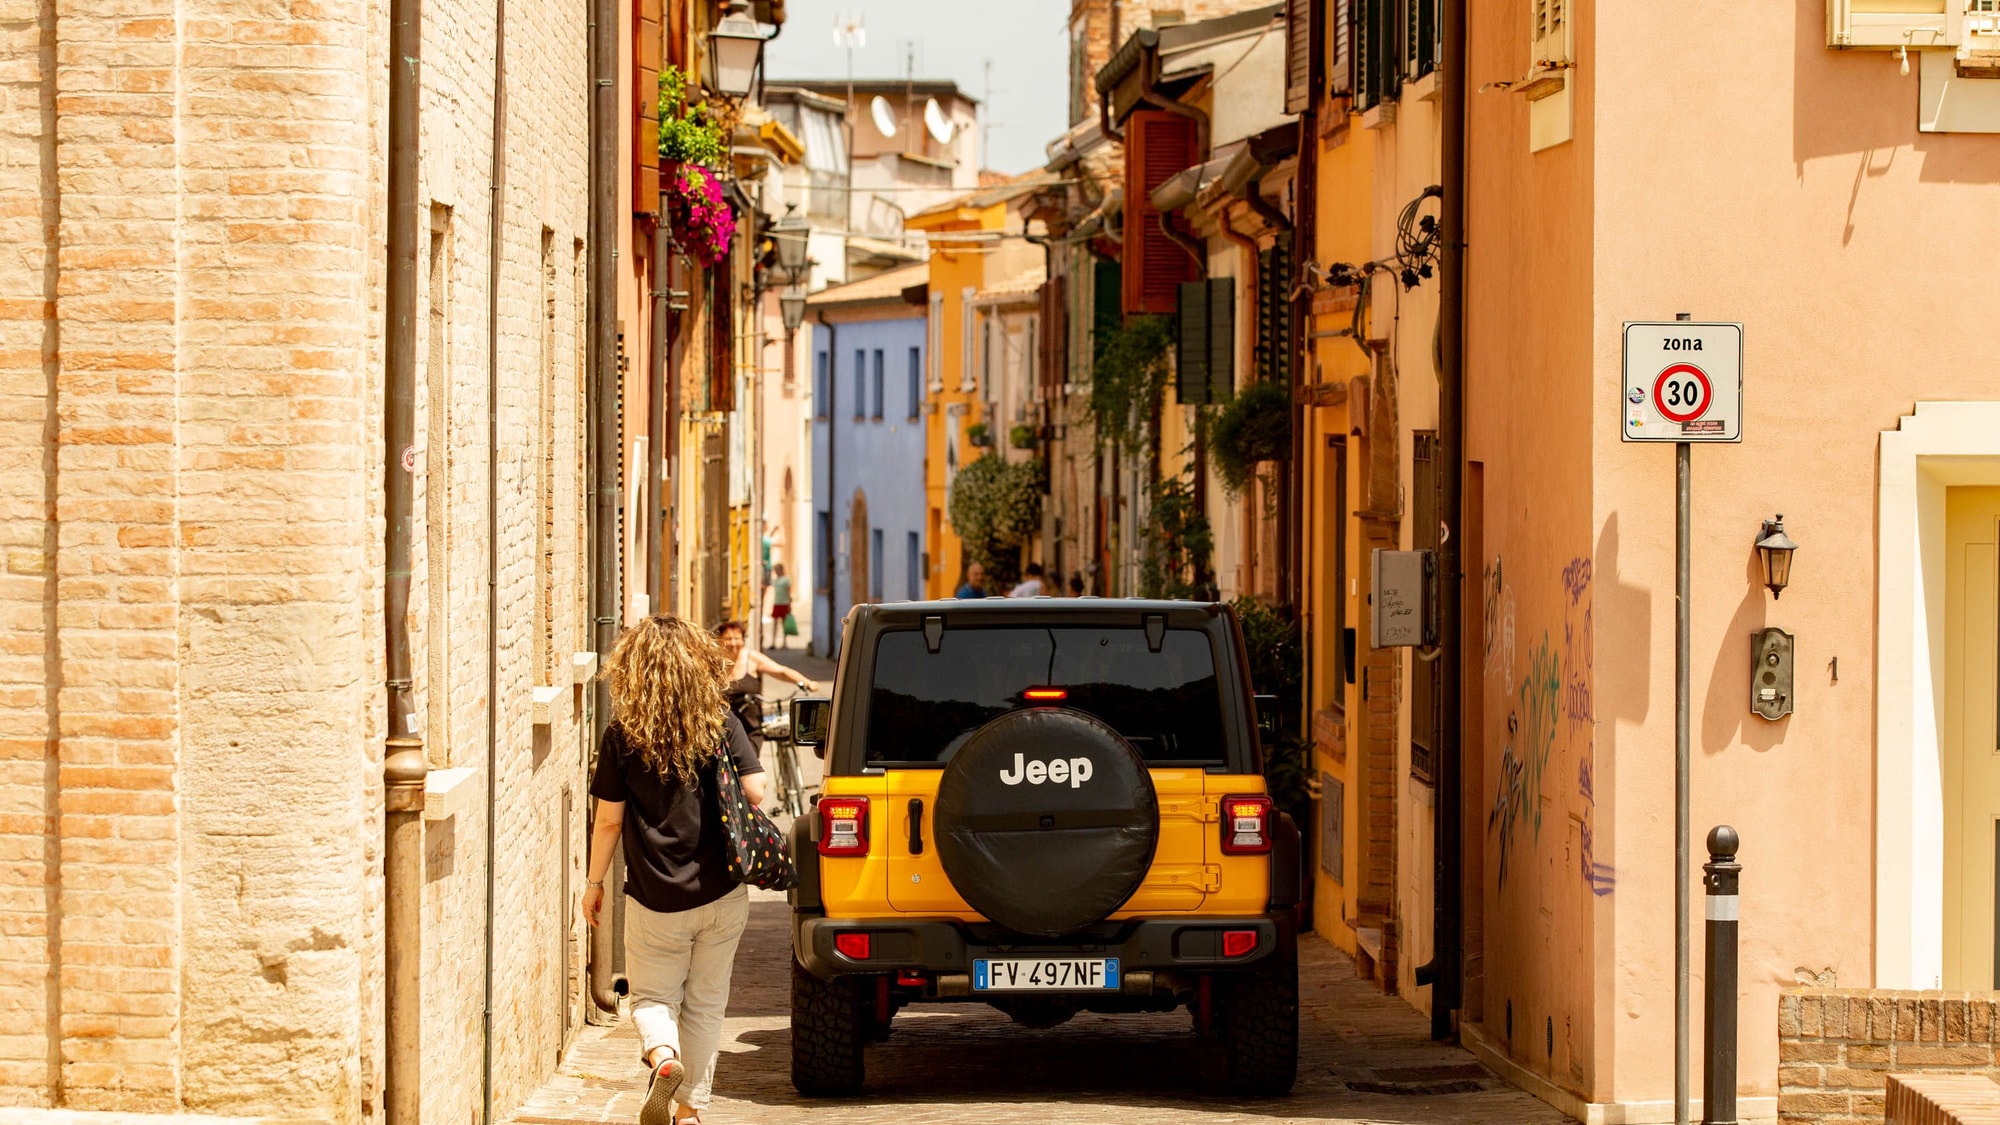 2019 Jeep Wrangler Rubicon in Rimini (Crossing the Rubicone)